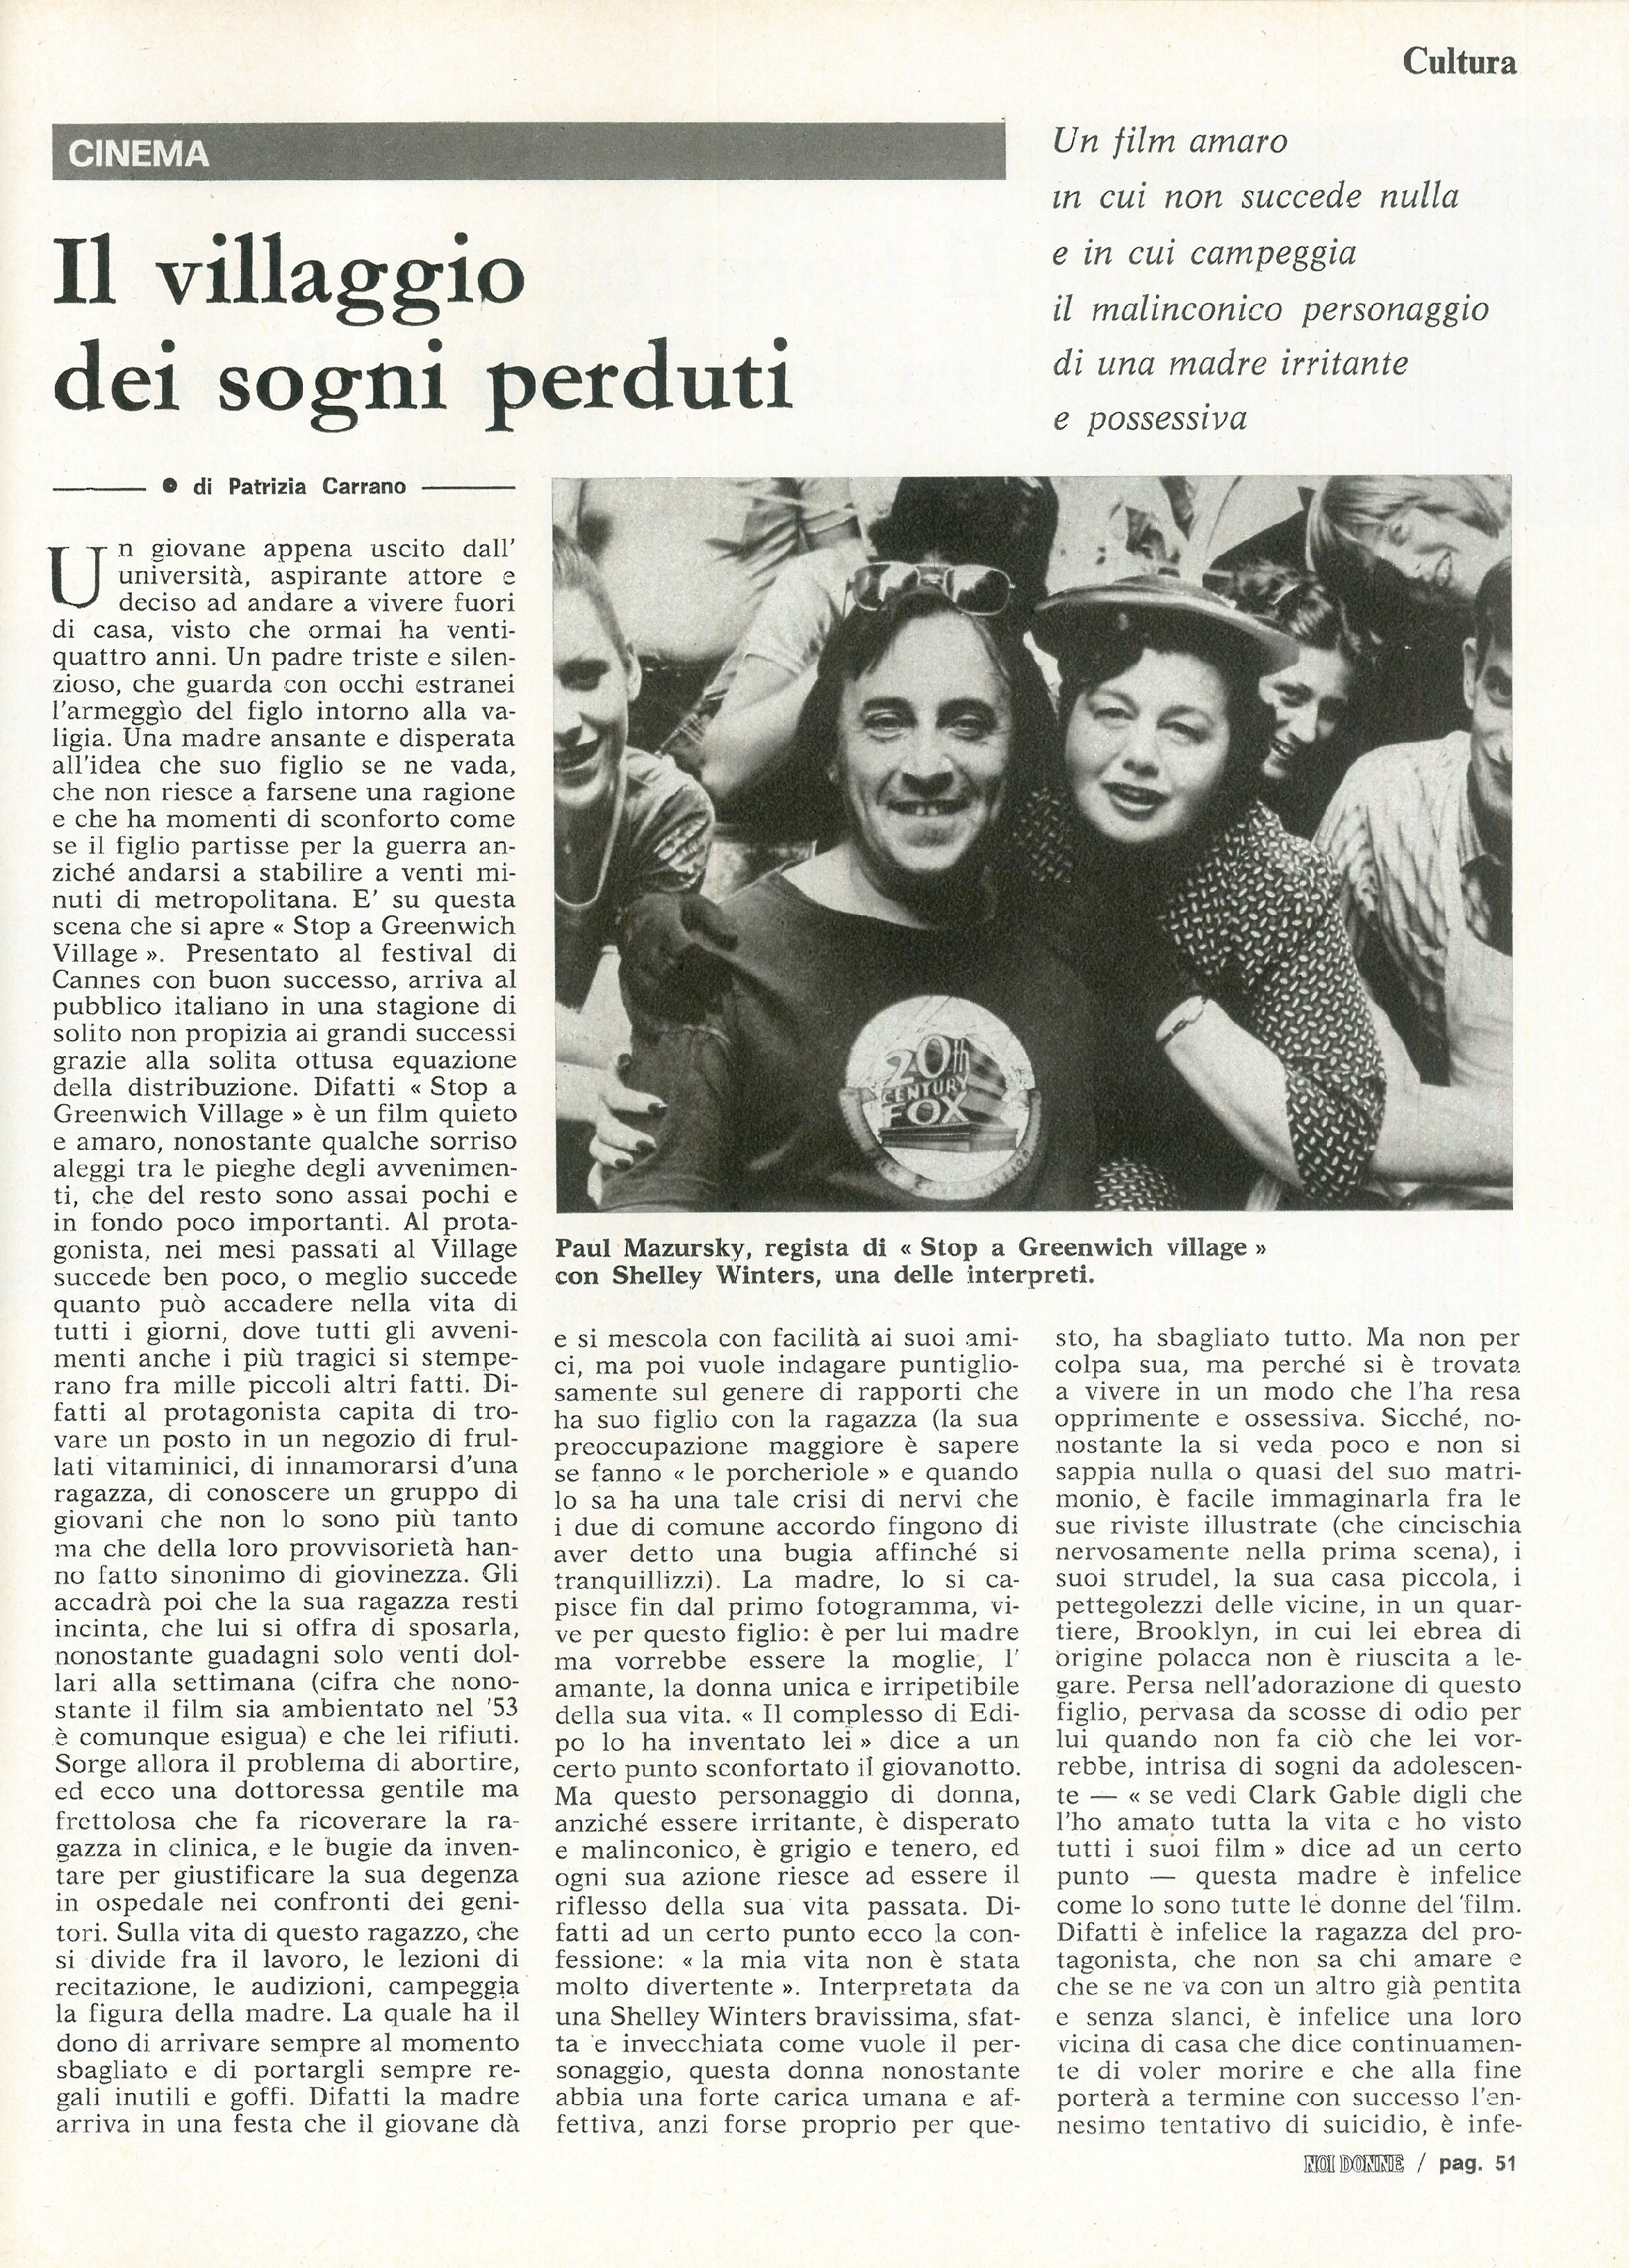 Foto: Le giovani femministe '76